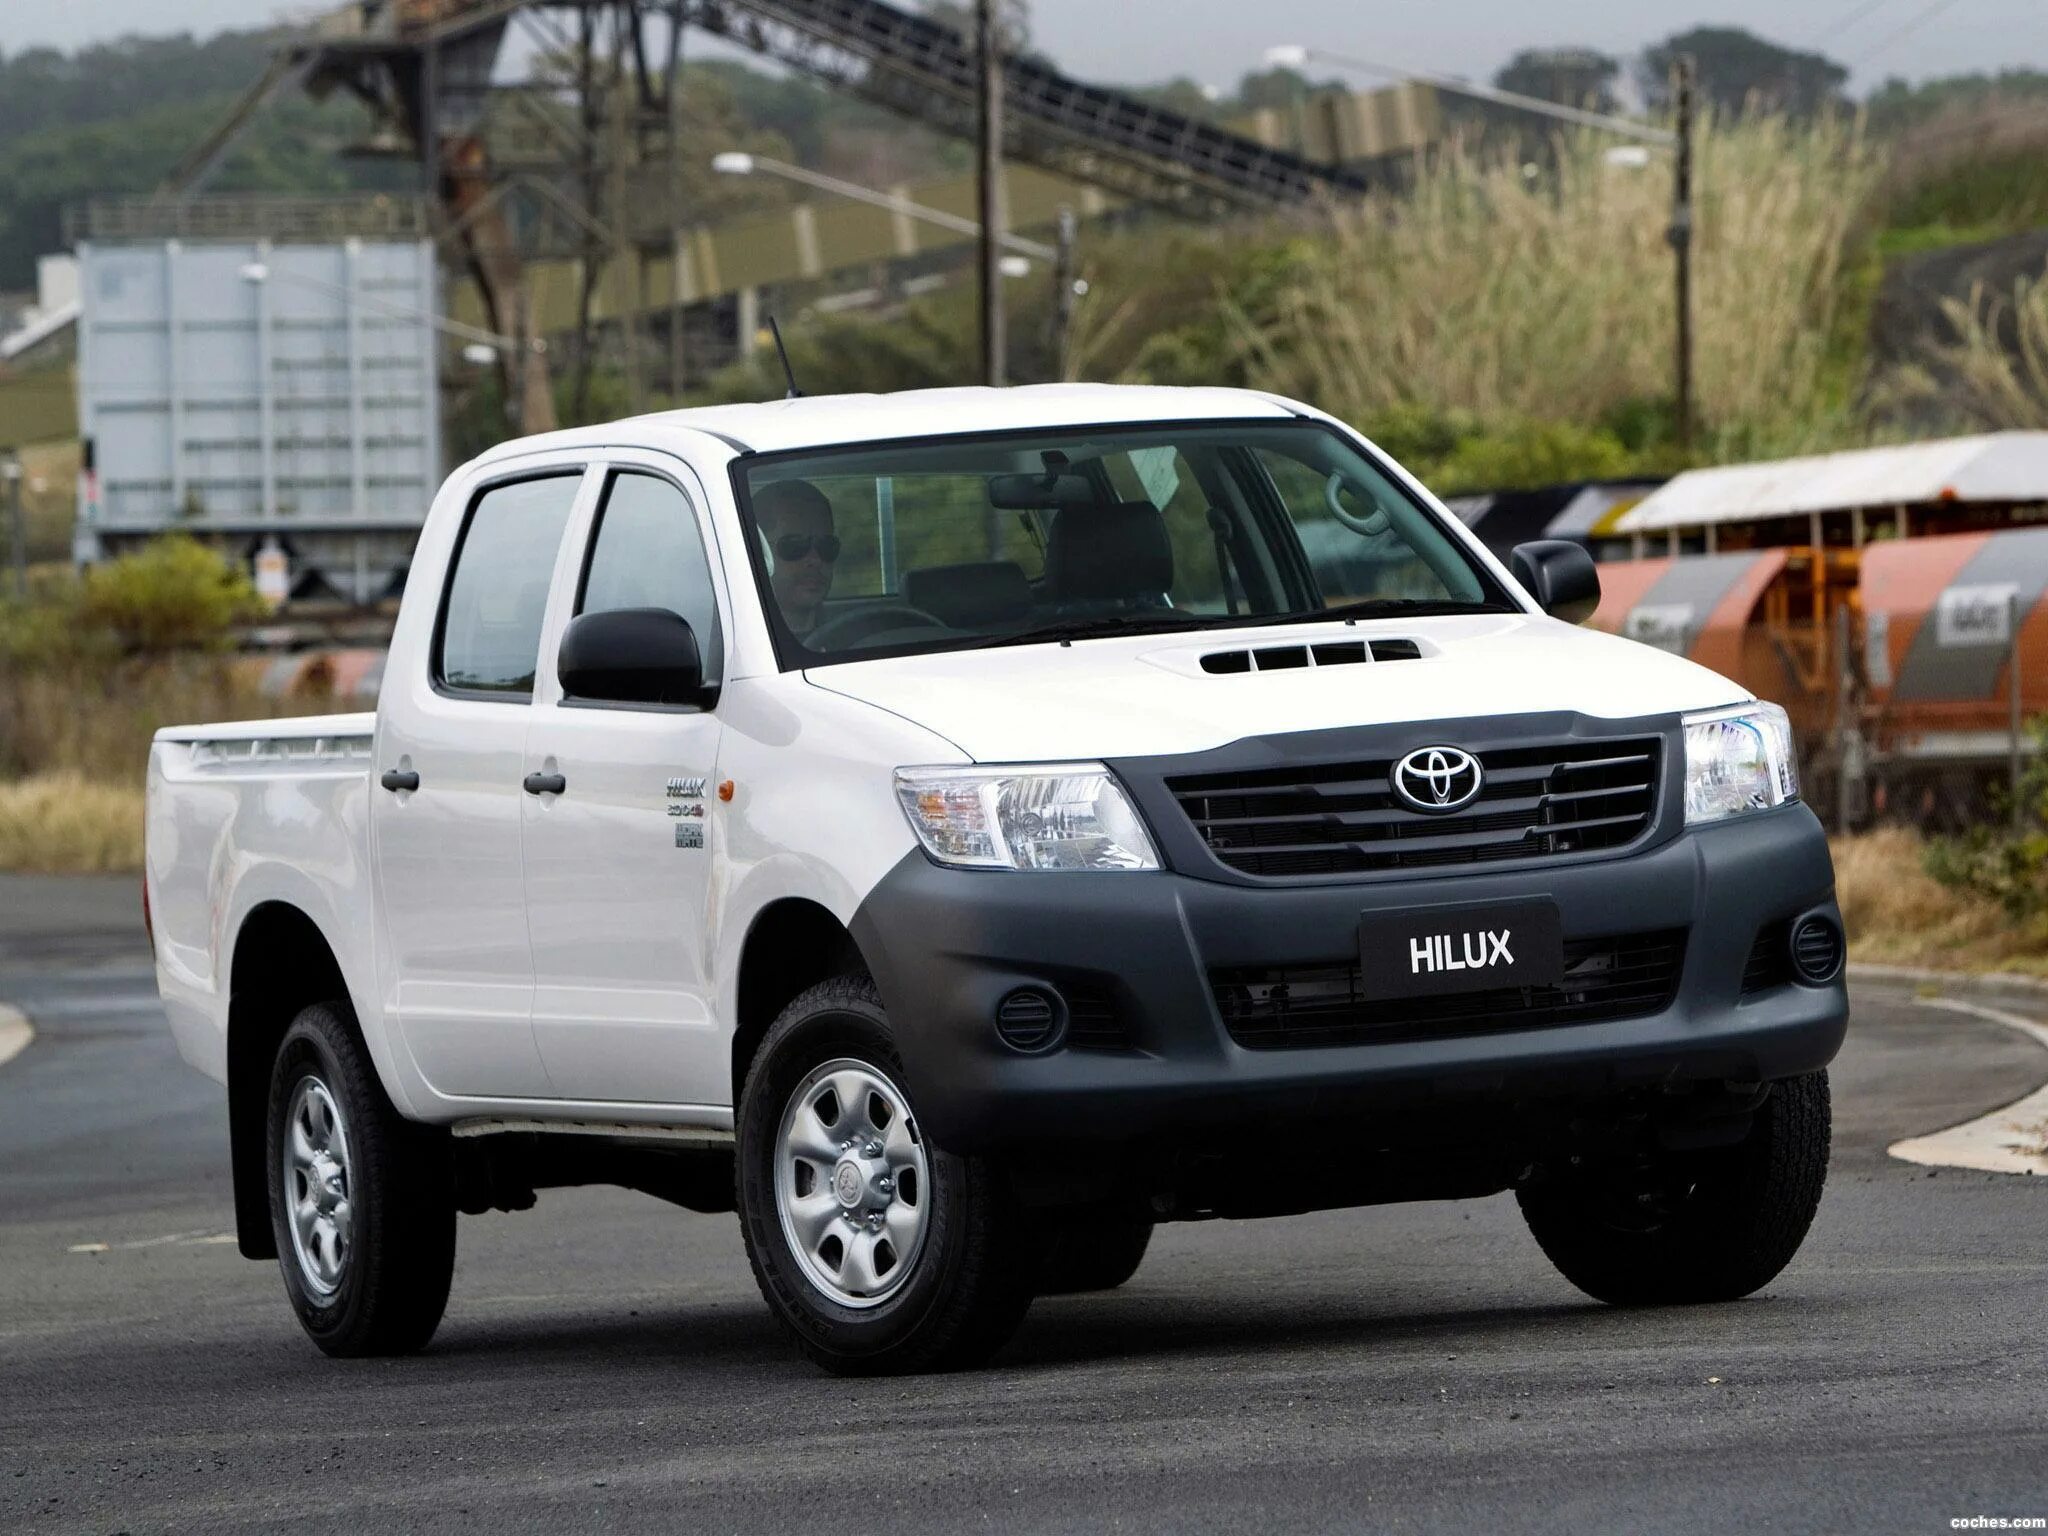 Пикап 2011. Toyota Hilux 2011. Toyota Hilux Double Cab. Toyota Hilux 4x4 Double Cab. Тойота Хайлюкс пикап 2011.